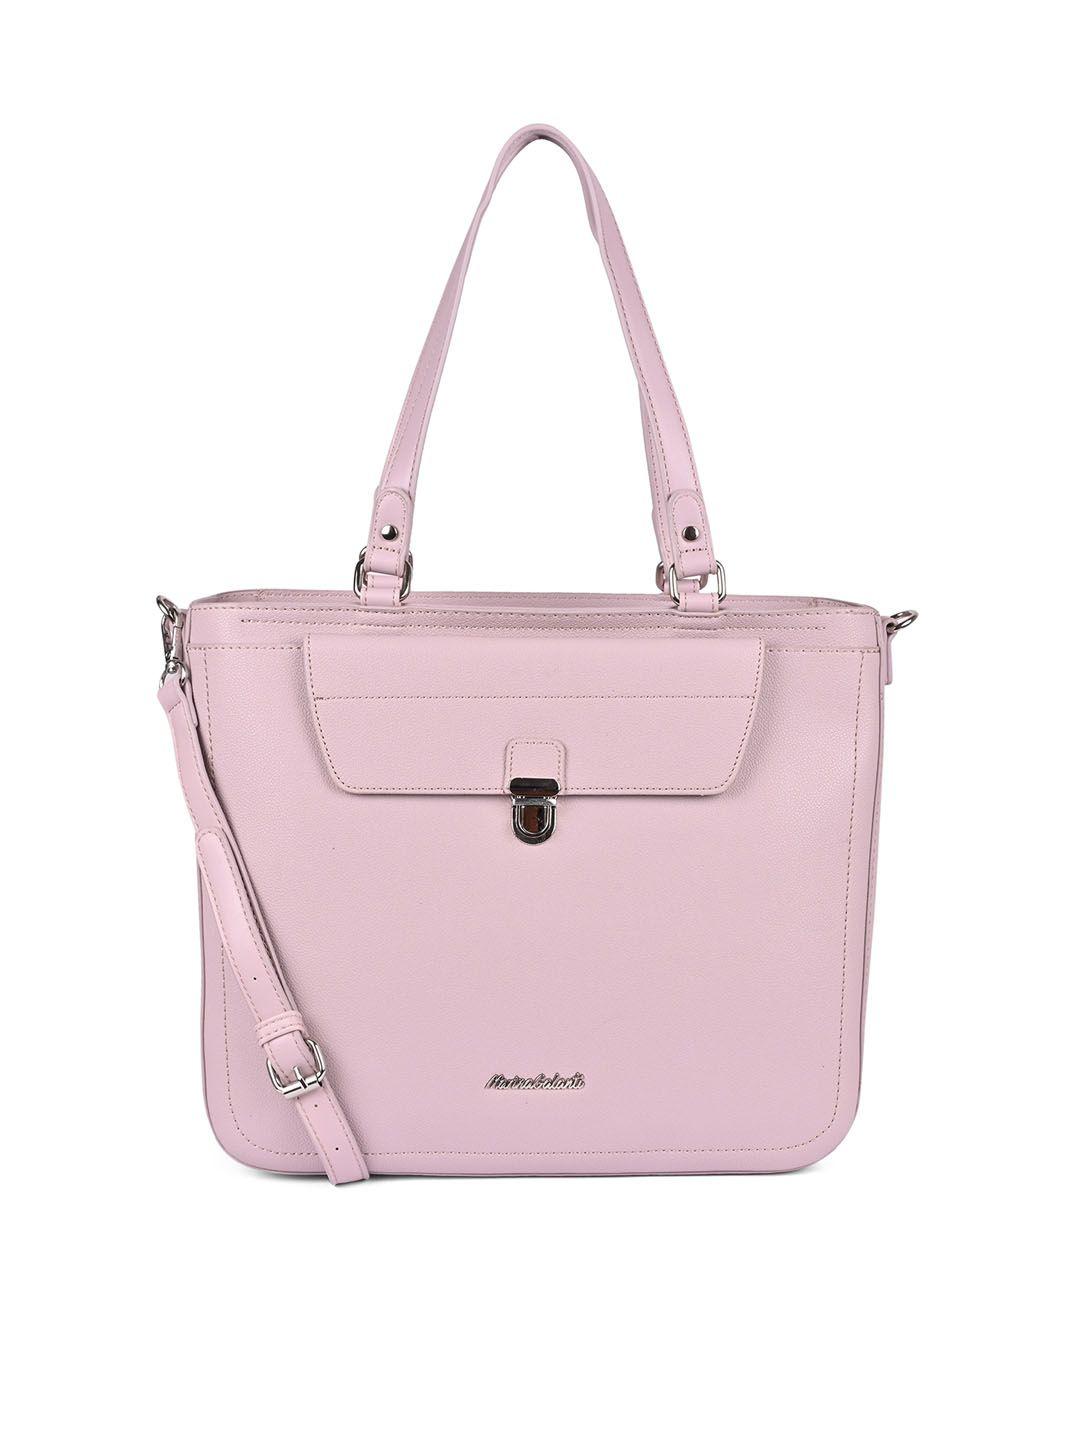 marina galanti pink pu structured handheld bag